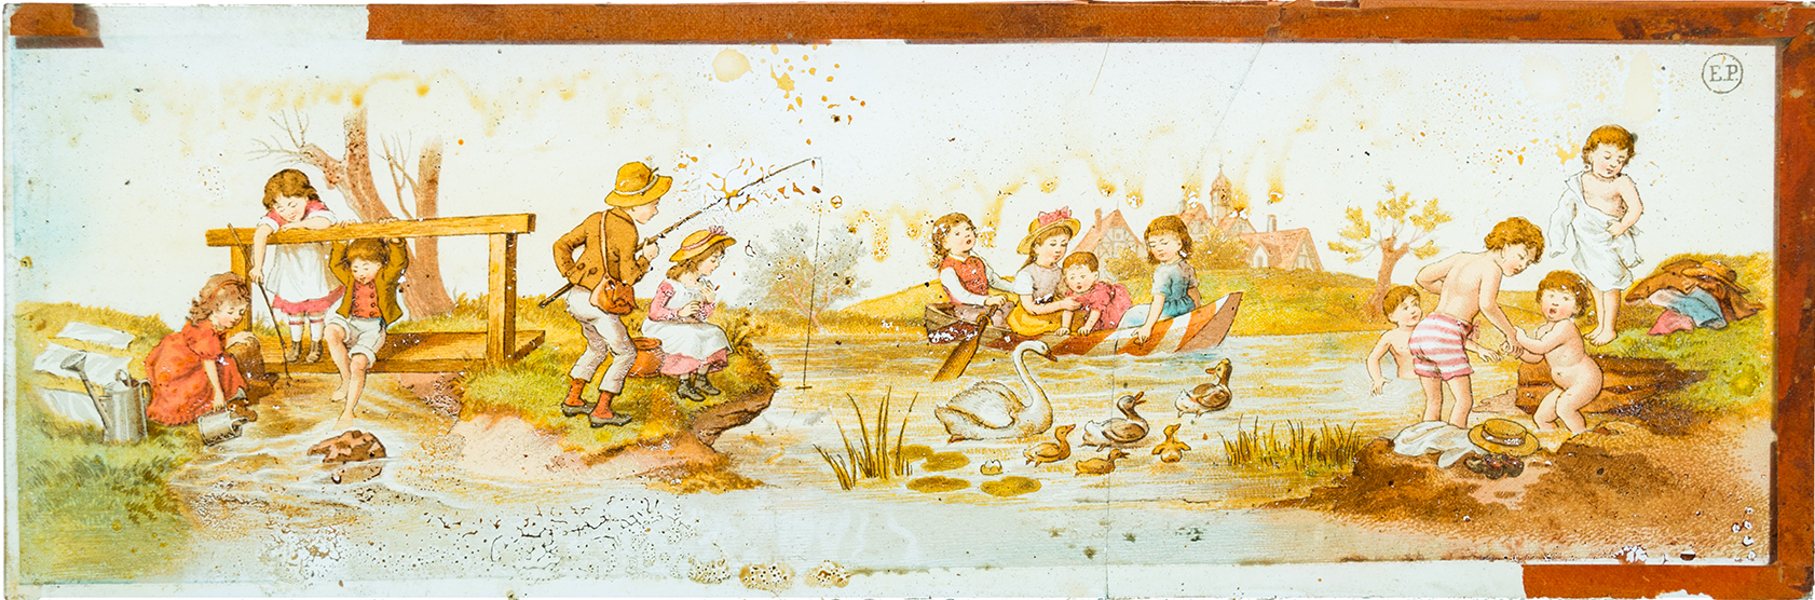 Children at a river